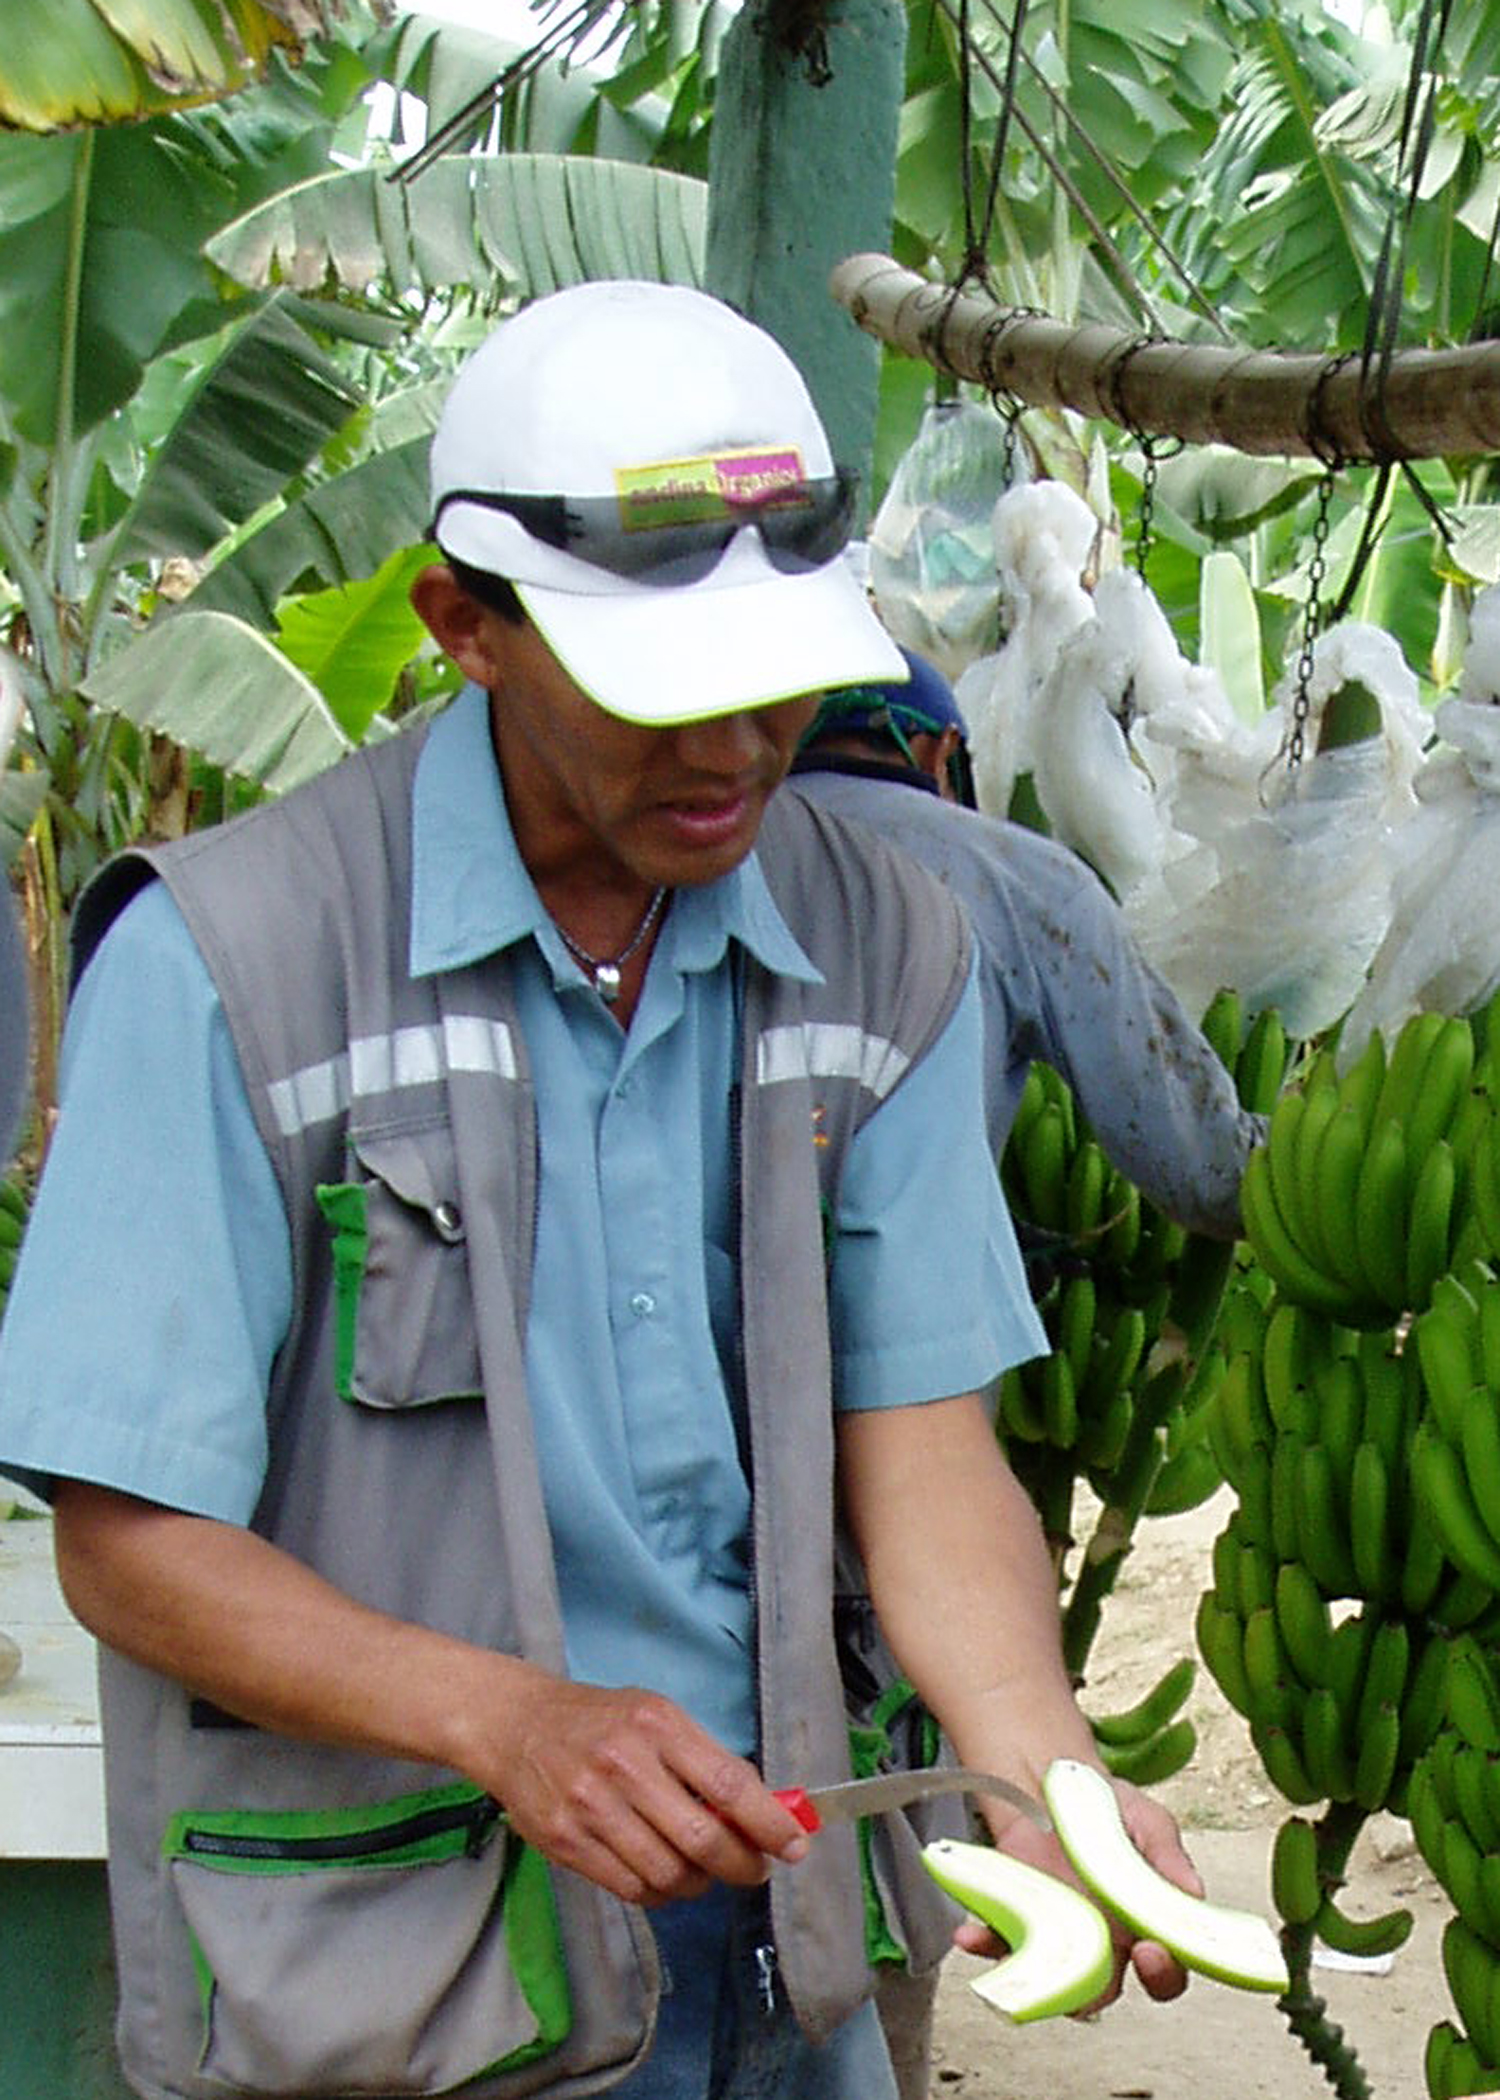 Fair Trade Equal Exchange Bananas at Valley Natural Foods